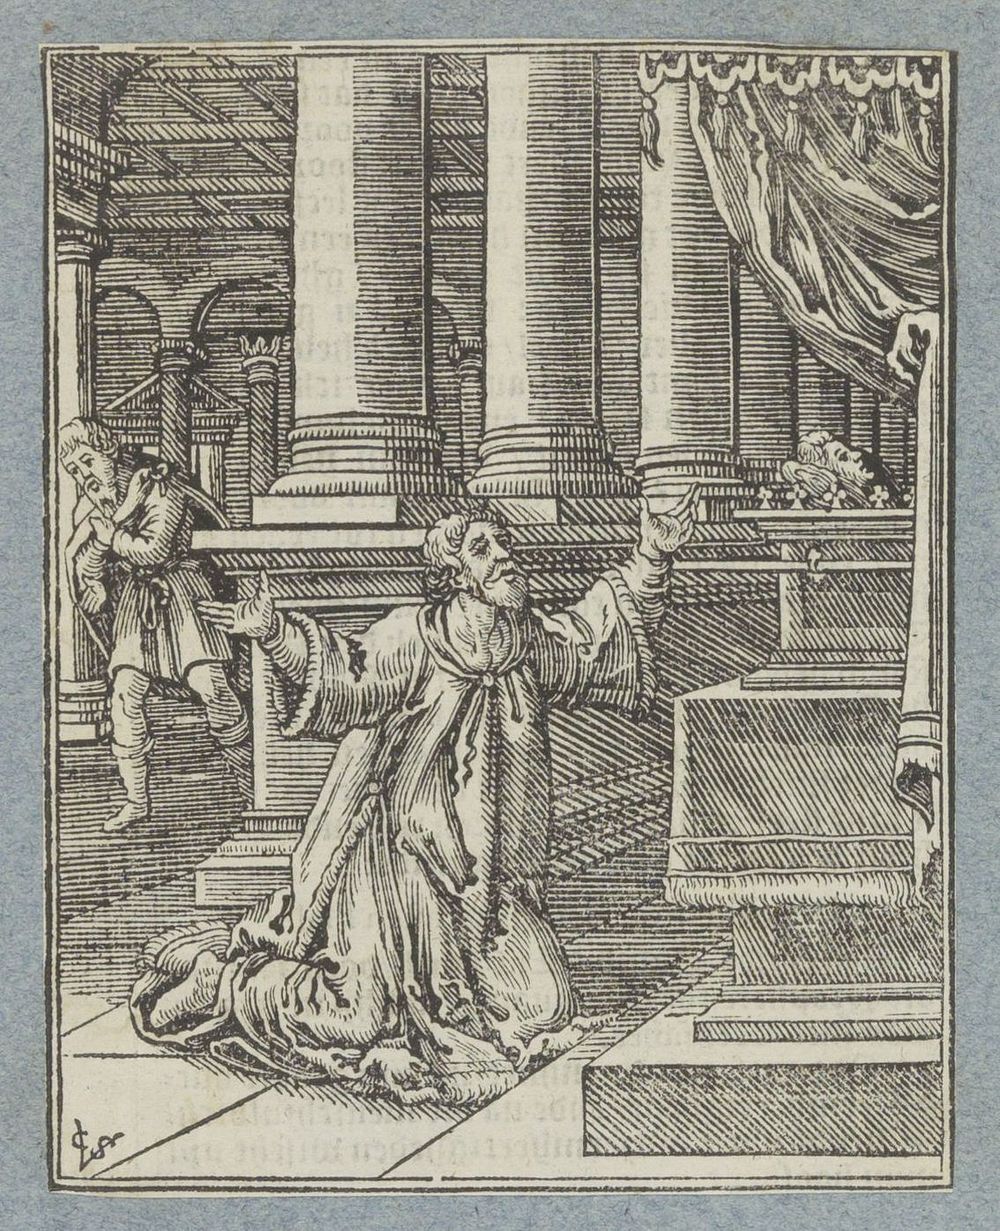 Davids berouw en straf (1645 - 1646) by Christoffel van Sichem II, Christoffel van Sichem III and Pieter Jacobsz Paets